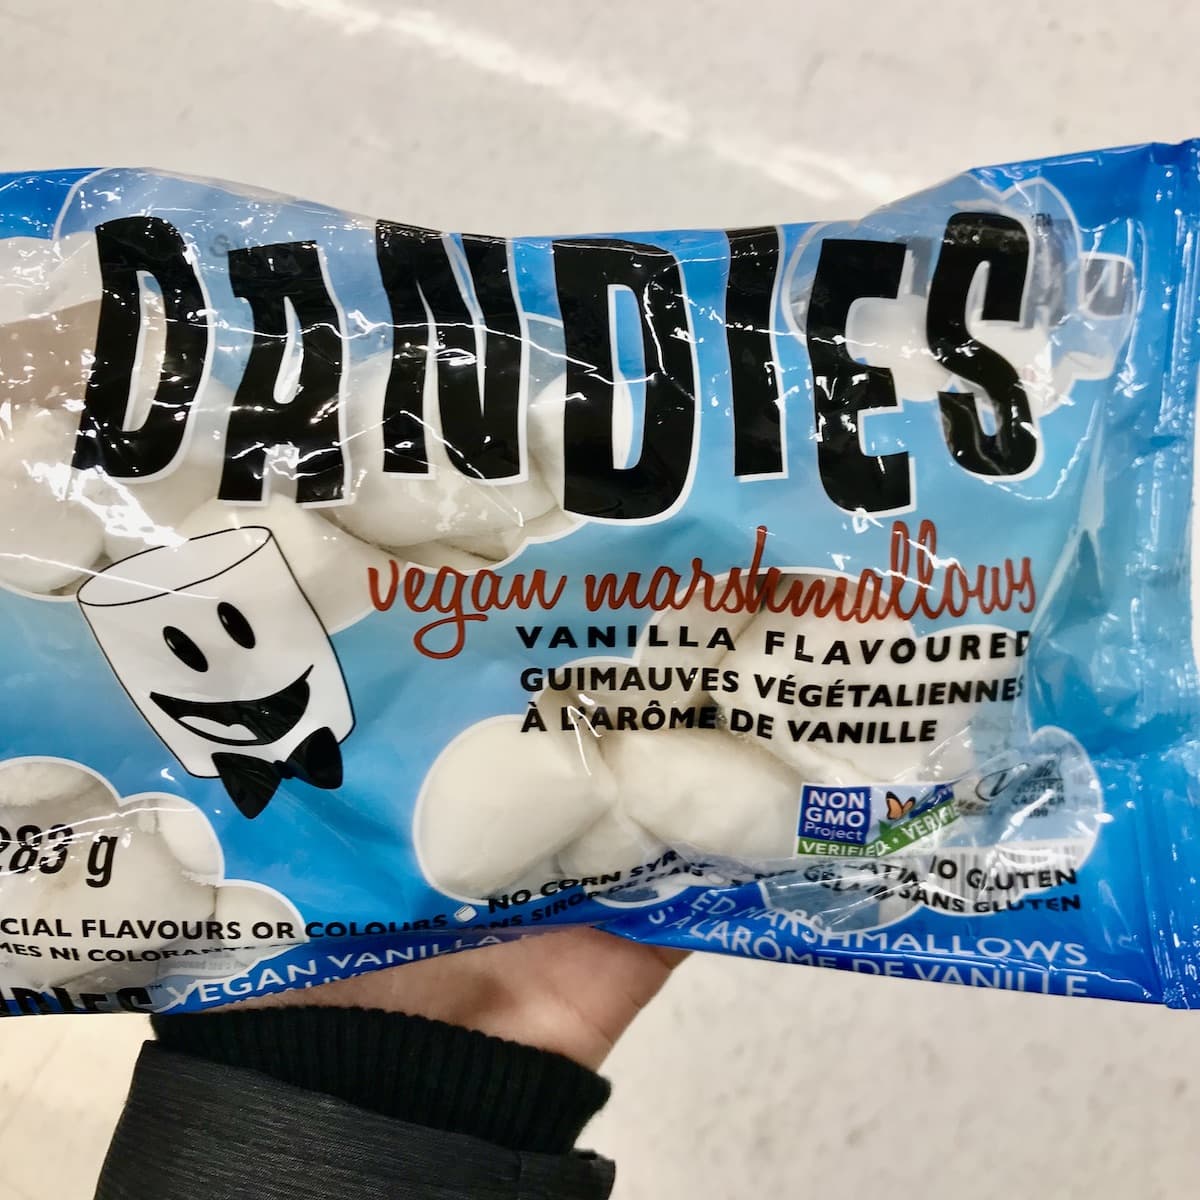 A package of Dandies vegan marshmallows.